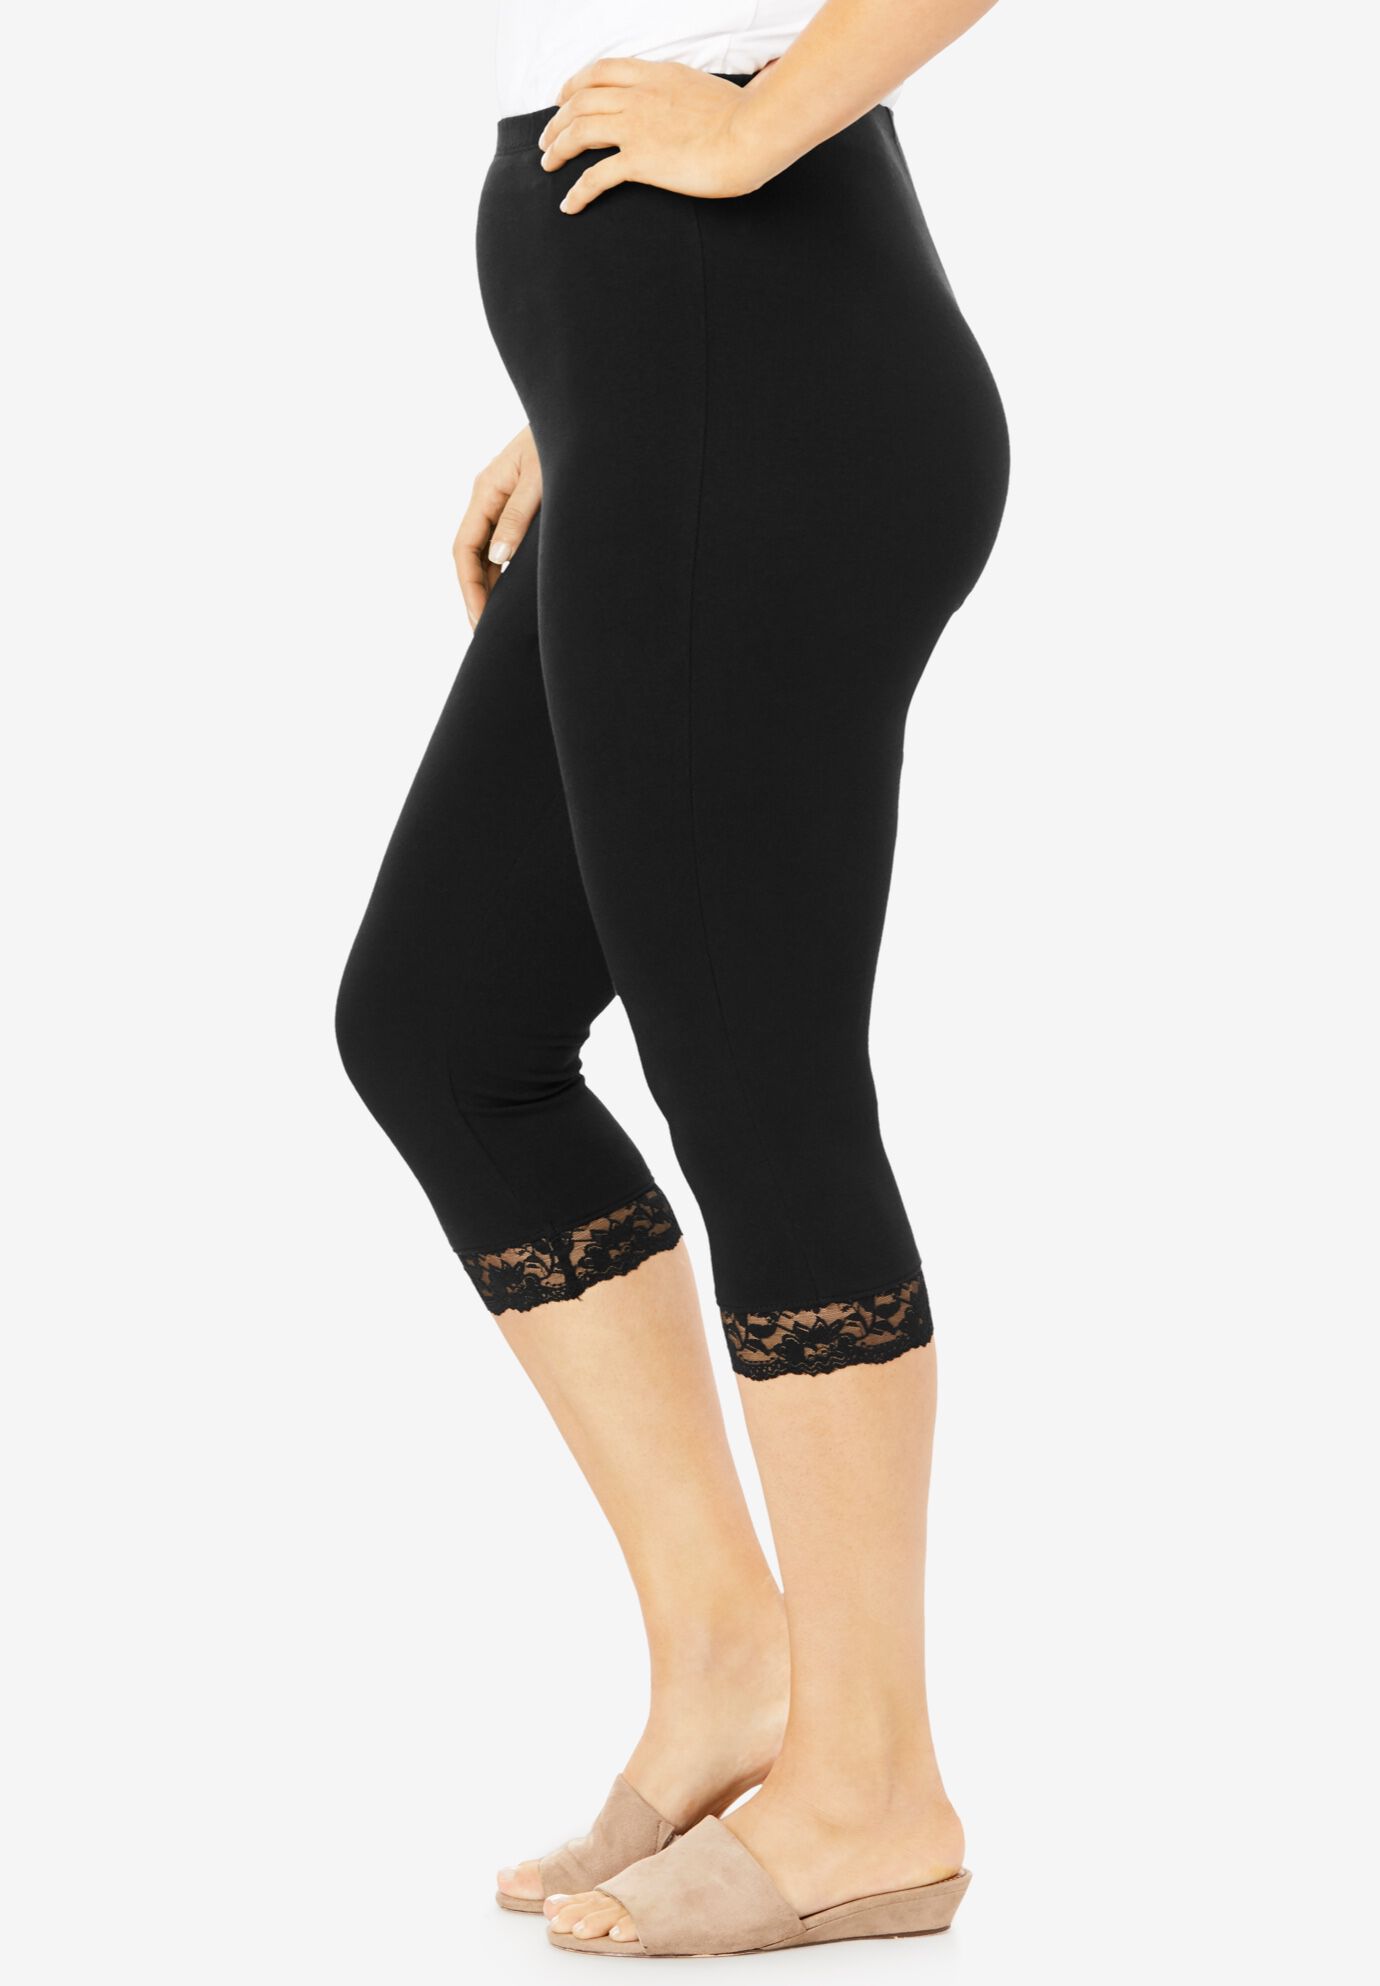 Buy Snowball Lace Capri Leggings for Women | Stylish Net Capri for Girls  (S, Black) at Amazon.in